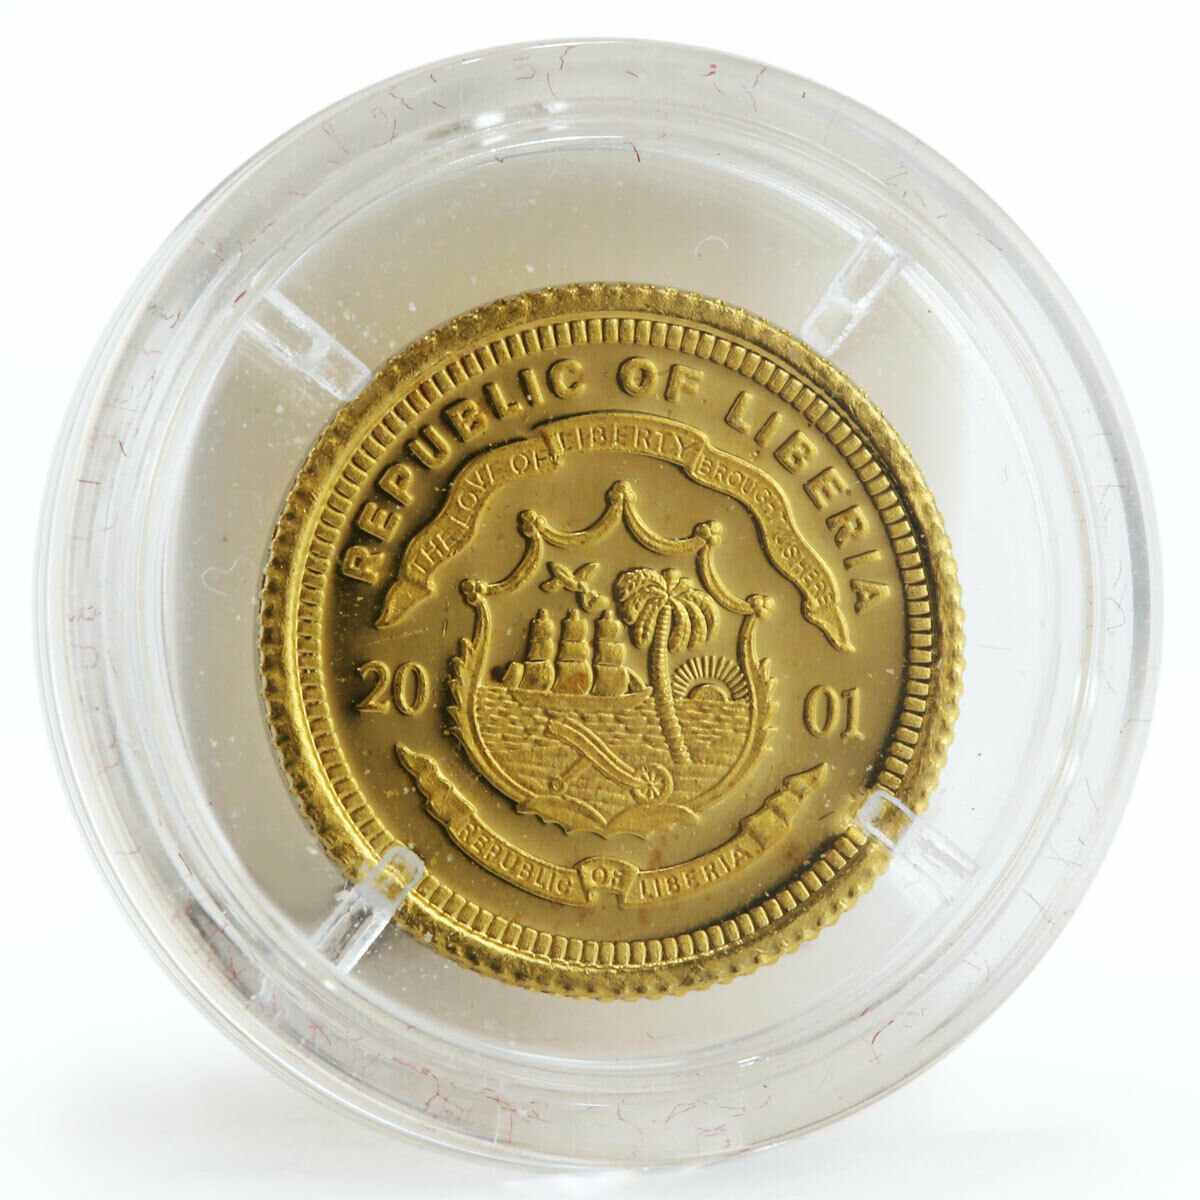 Liberia 10 dollars Marlene Dietrich proof gold coin 2001